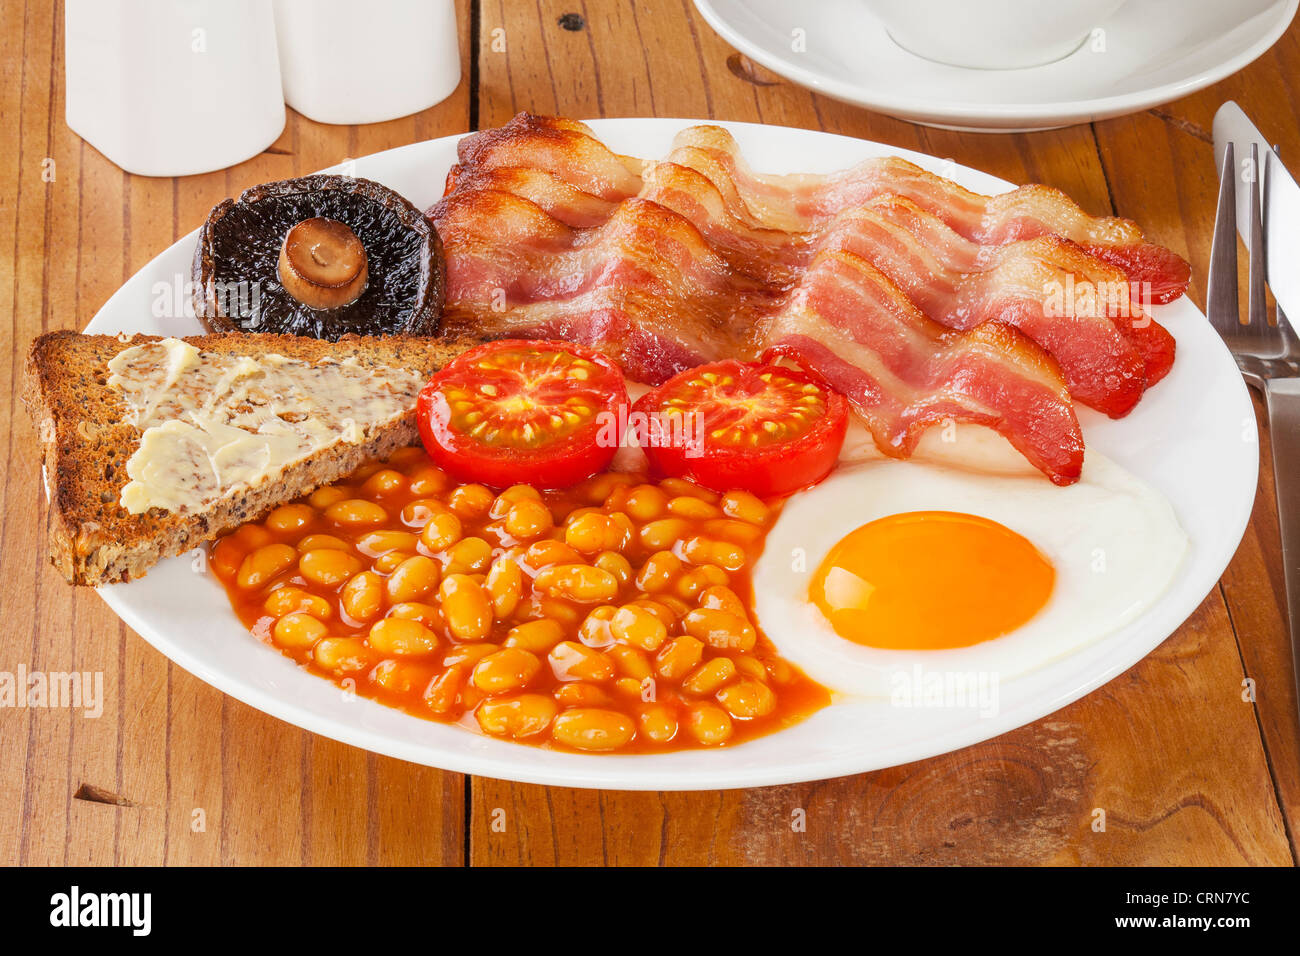 Full English breakfast on an old pine kitchen table. Stock Photo